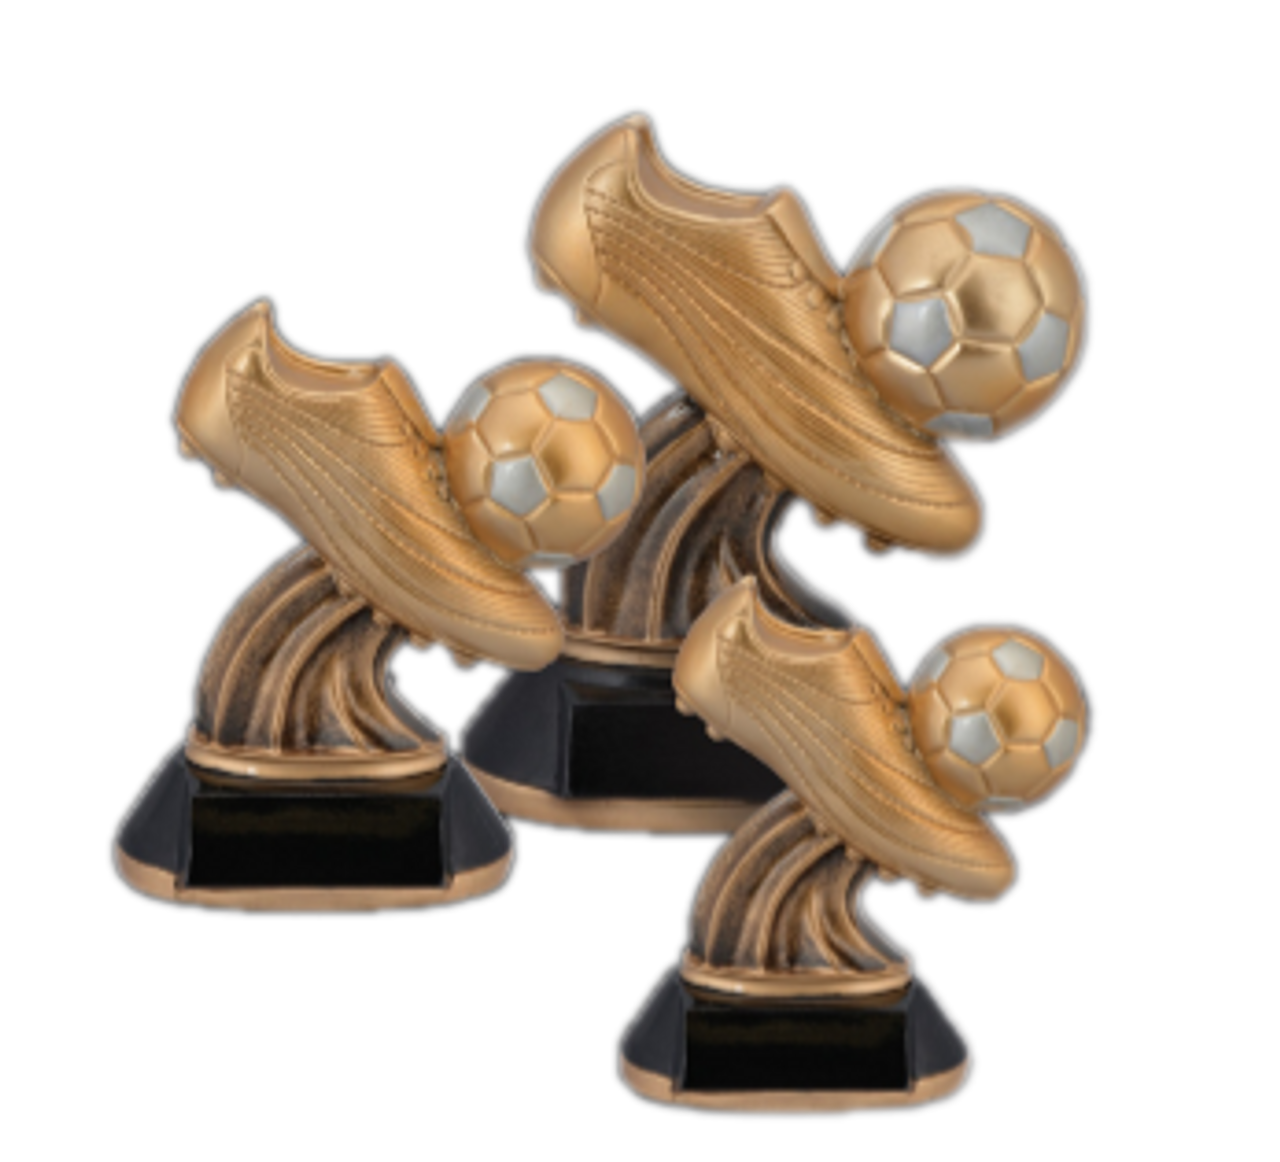 Soccer trophy World Cup Trophy Model Souvenir Gold 5/8.3/10.6/14 inch 